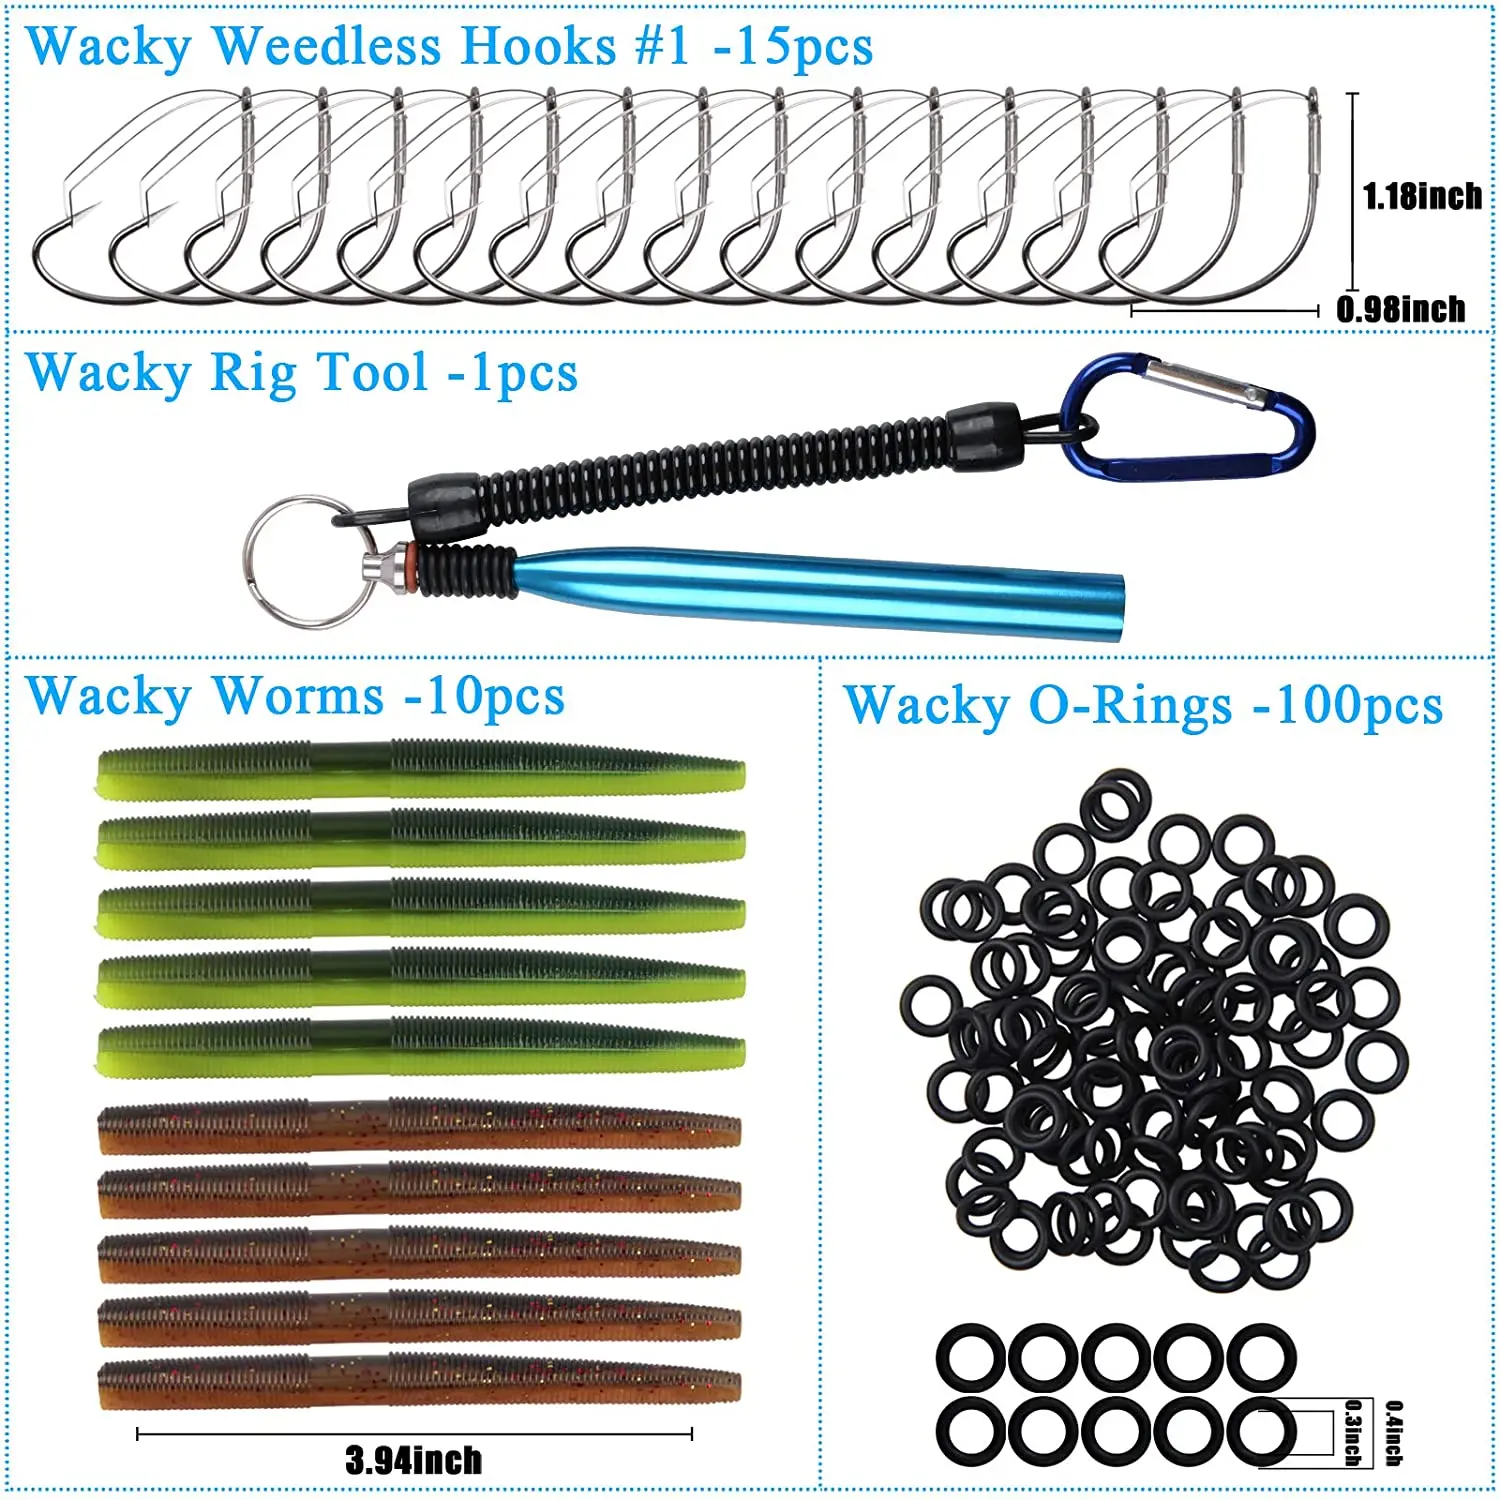 https://ae01.alicdn.com/kf/Hc751234868e0486cbe468ed8f50f16car/126pcs-Box-Wcky-Rig-Worm-Hooks-Fishing-Tool-Kit-Wacky-Worms-Wacky-O-Rings-Wacky-Rig.jpg